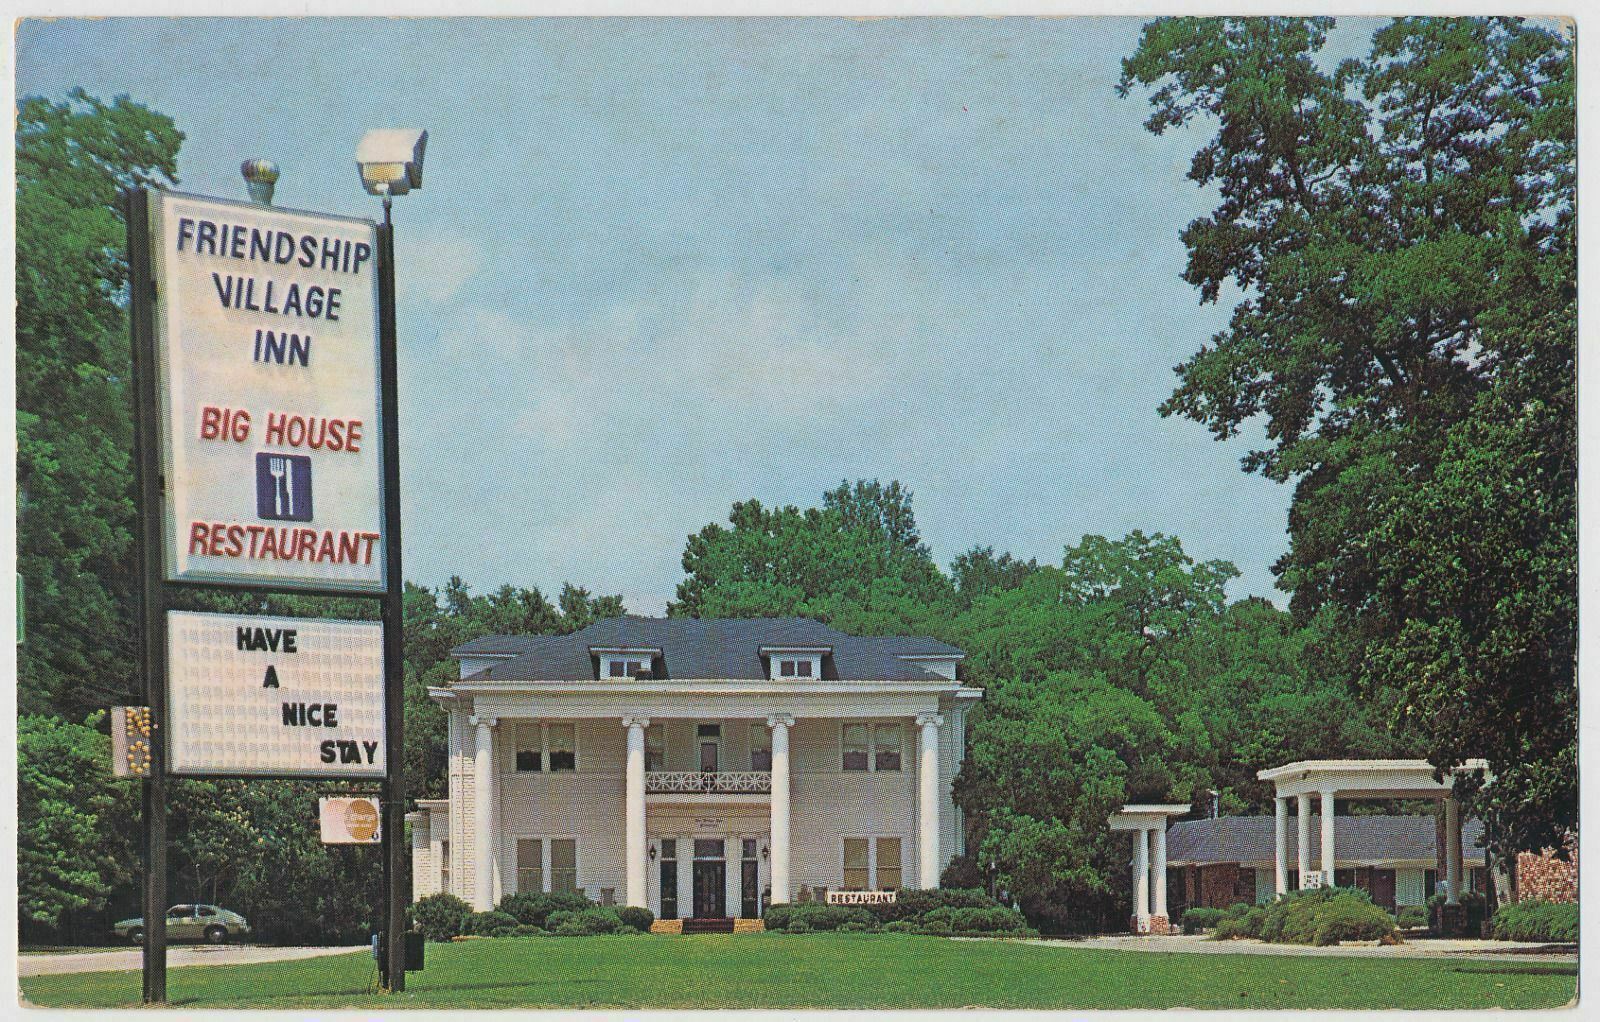 Friendship Village Inn, Big House Restaurant, Hazlehurst, Georgia 